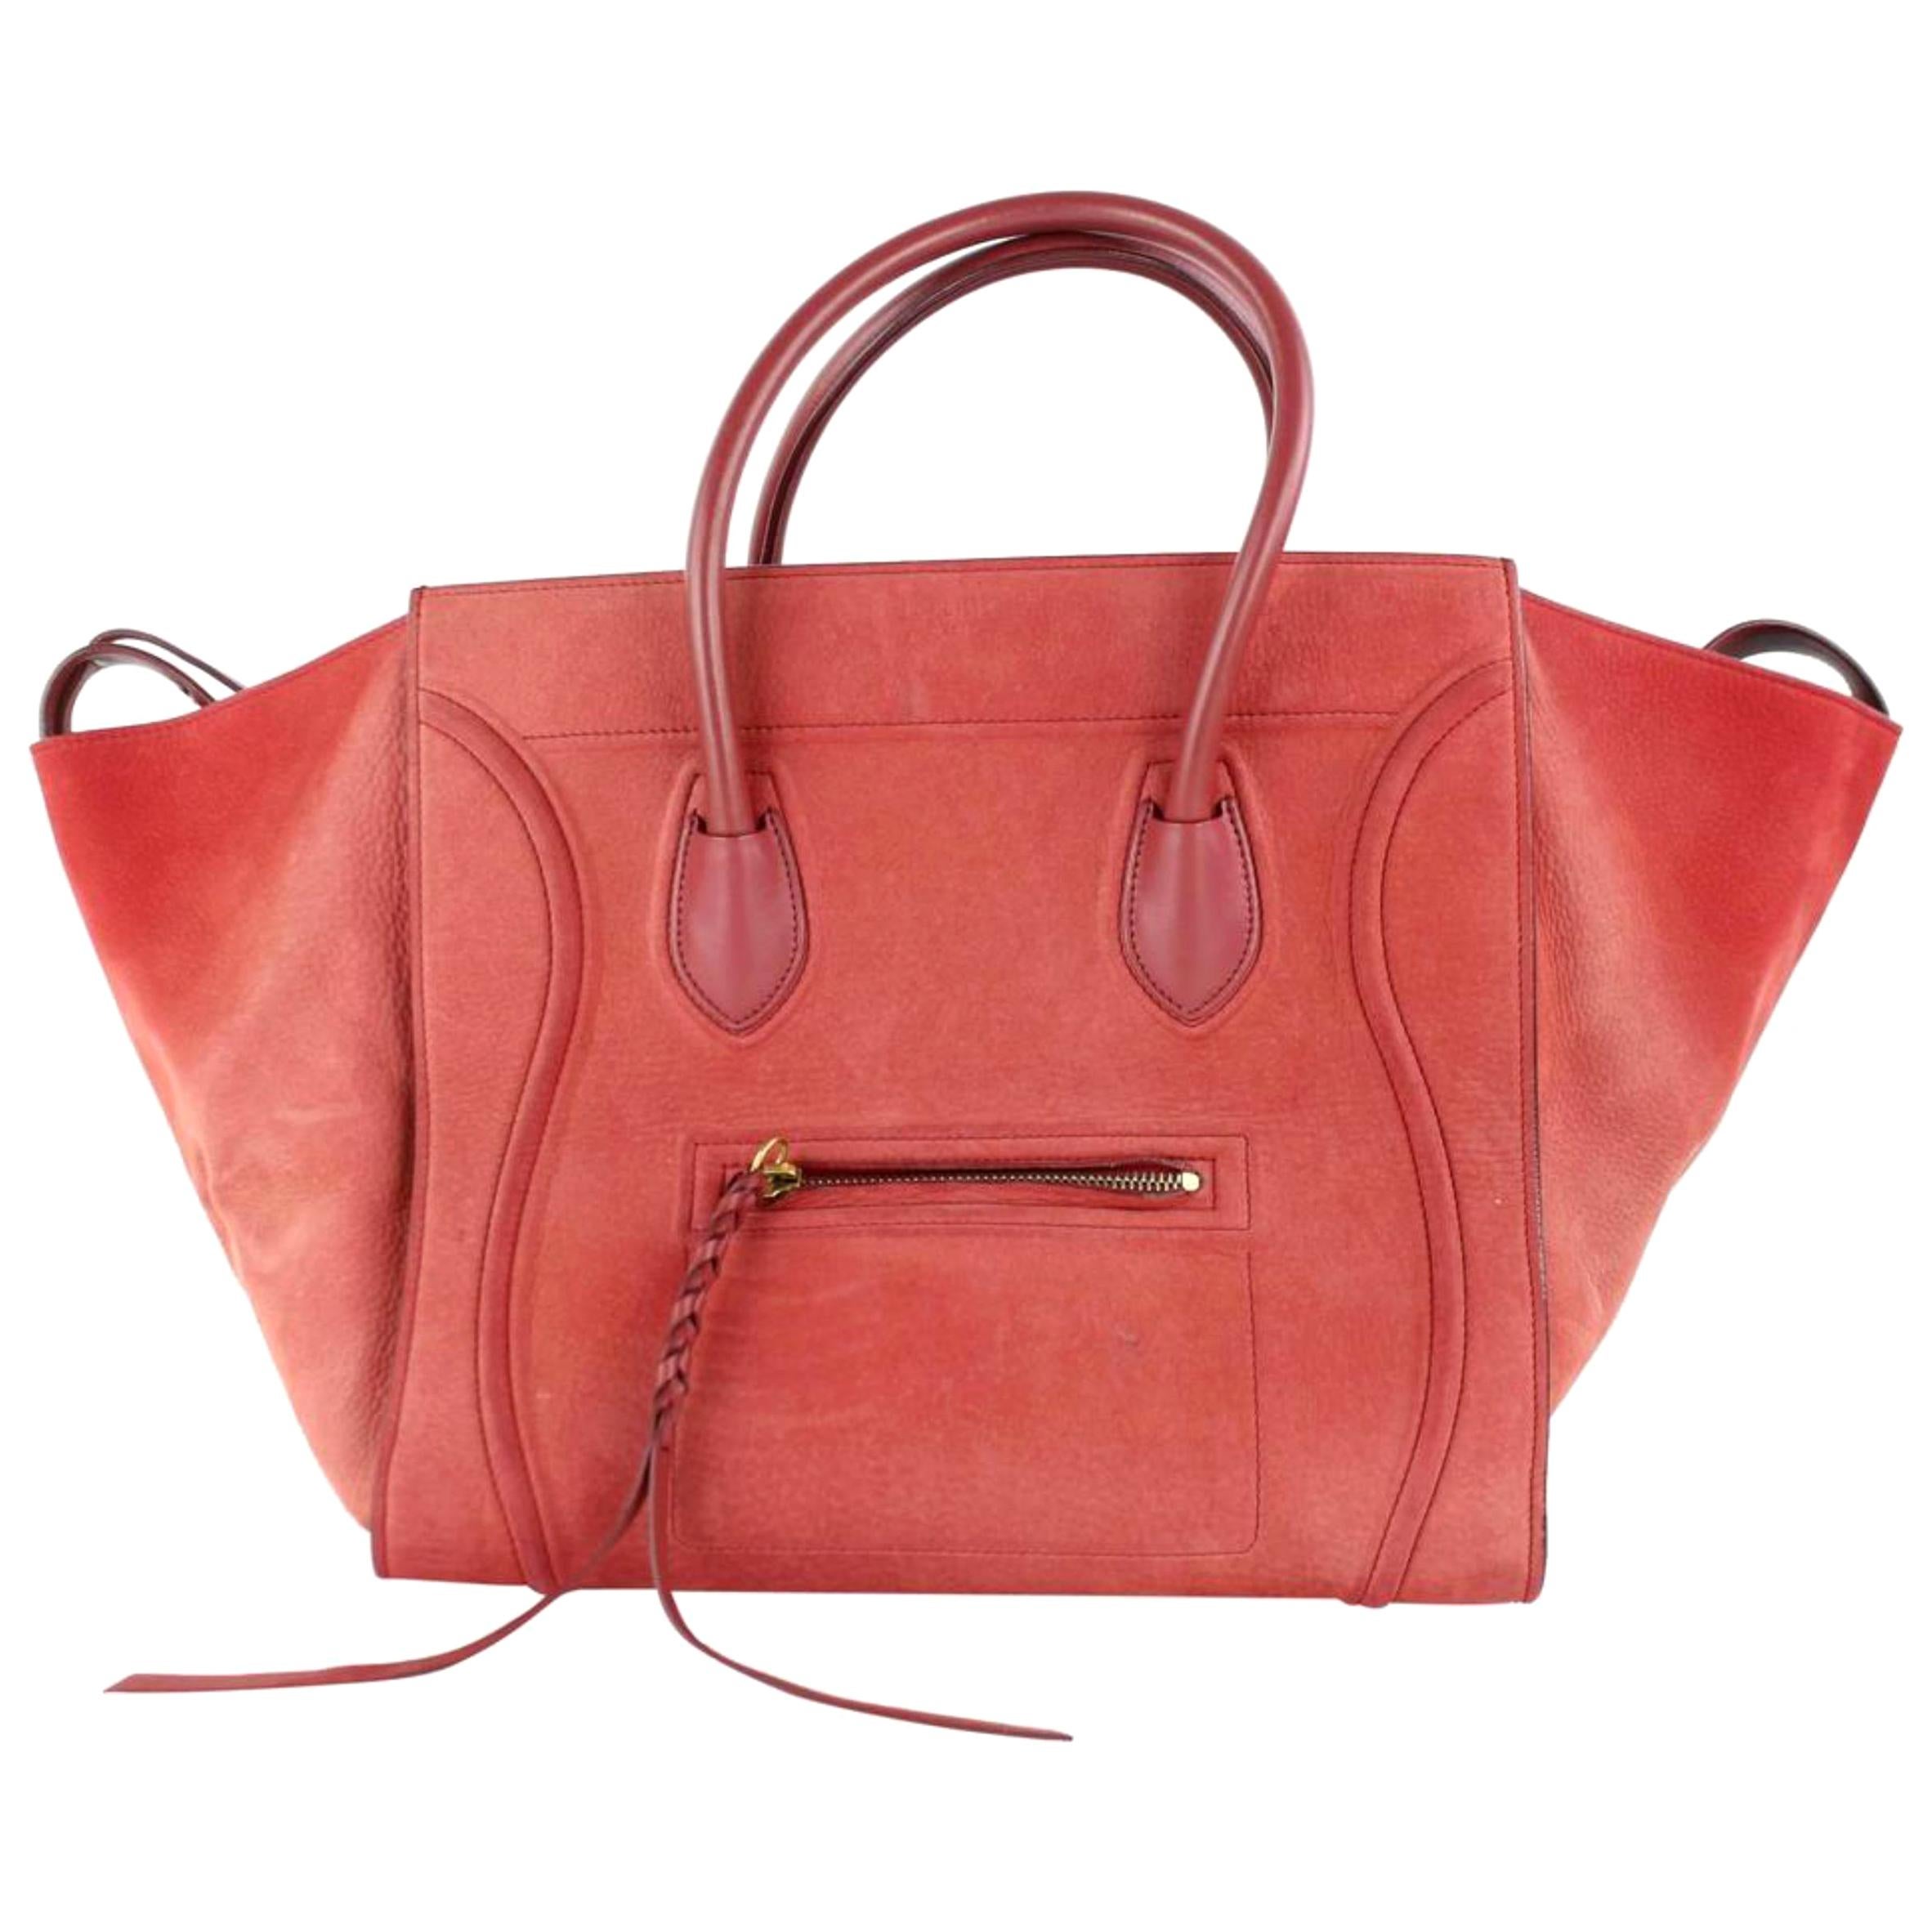 Céline Cabas Phantom Luggage Dark 16cez0129 Red Suede Leather Satchel For Sale